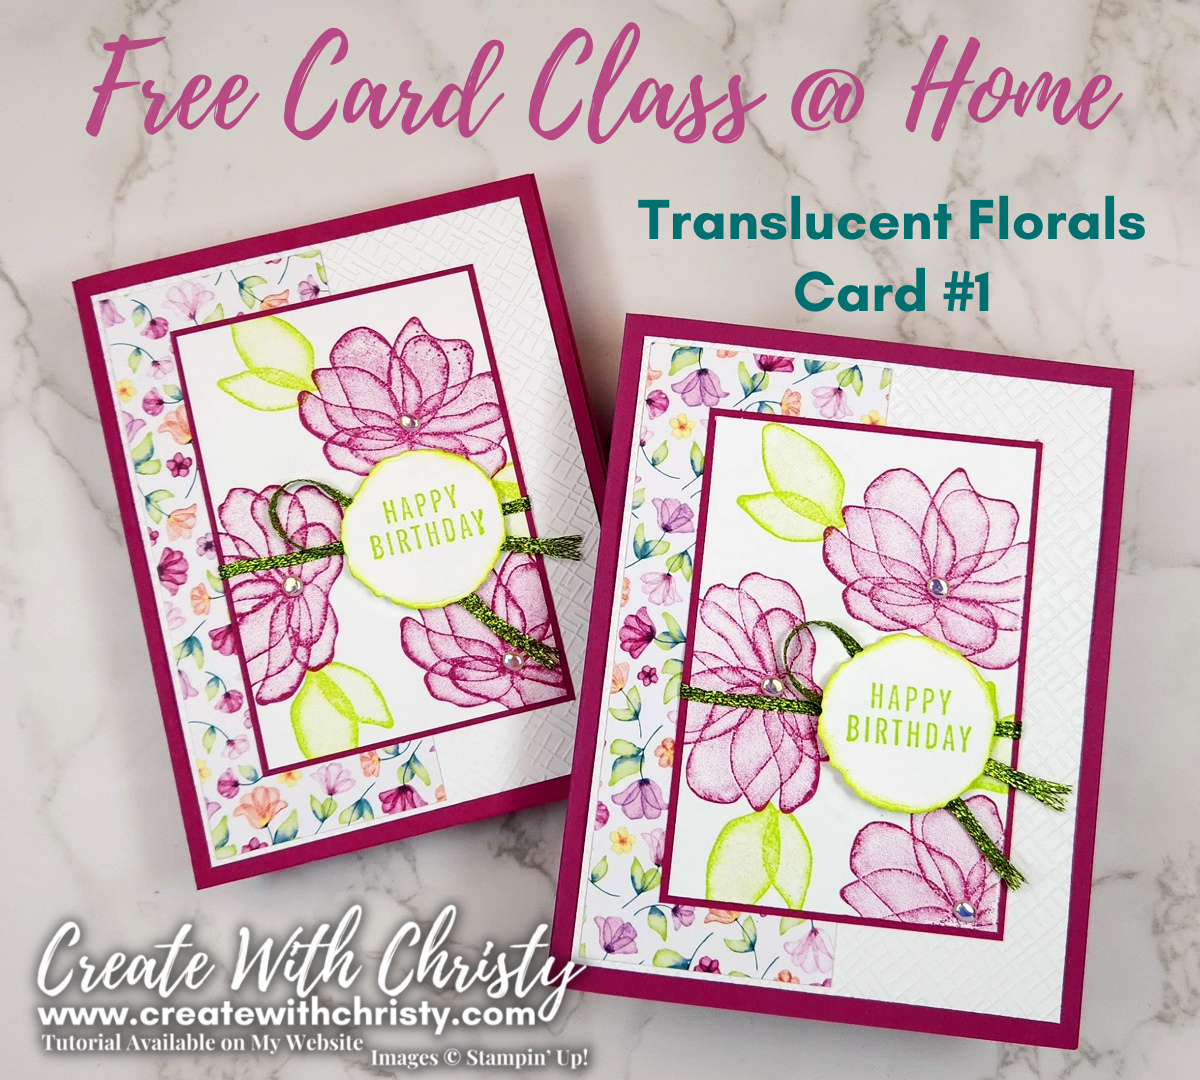 Delightful Translucent Florals! - Pretty Paper Cards